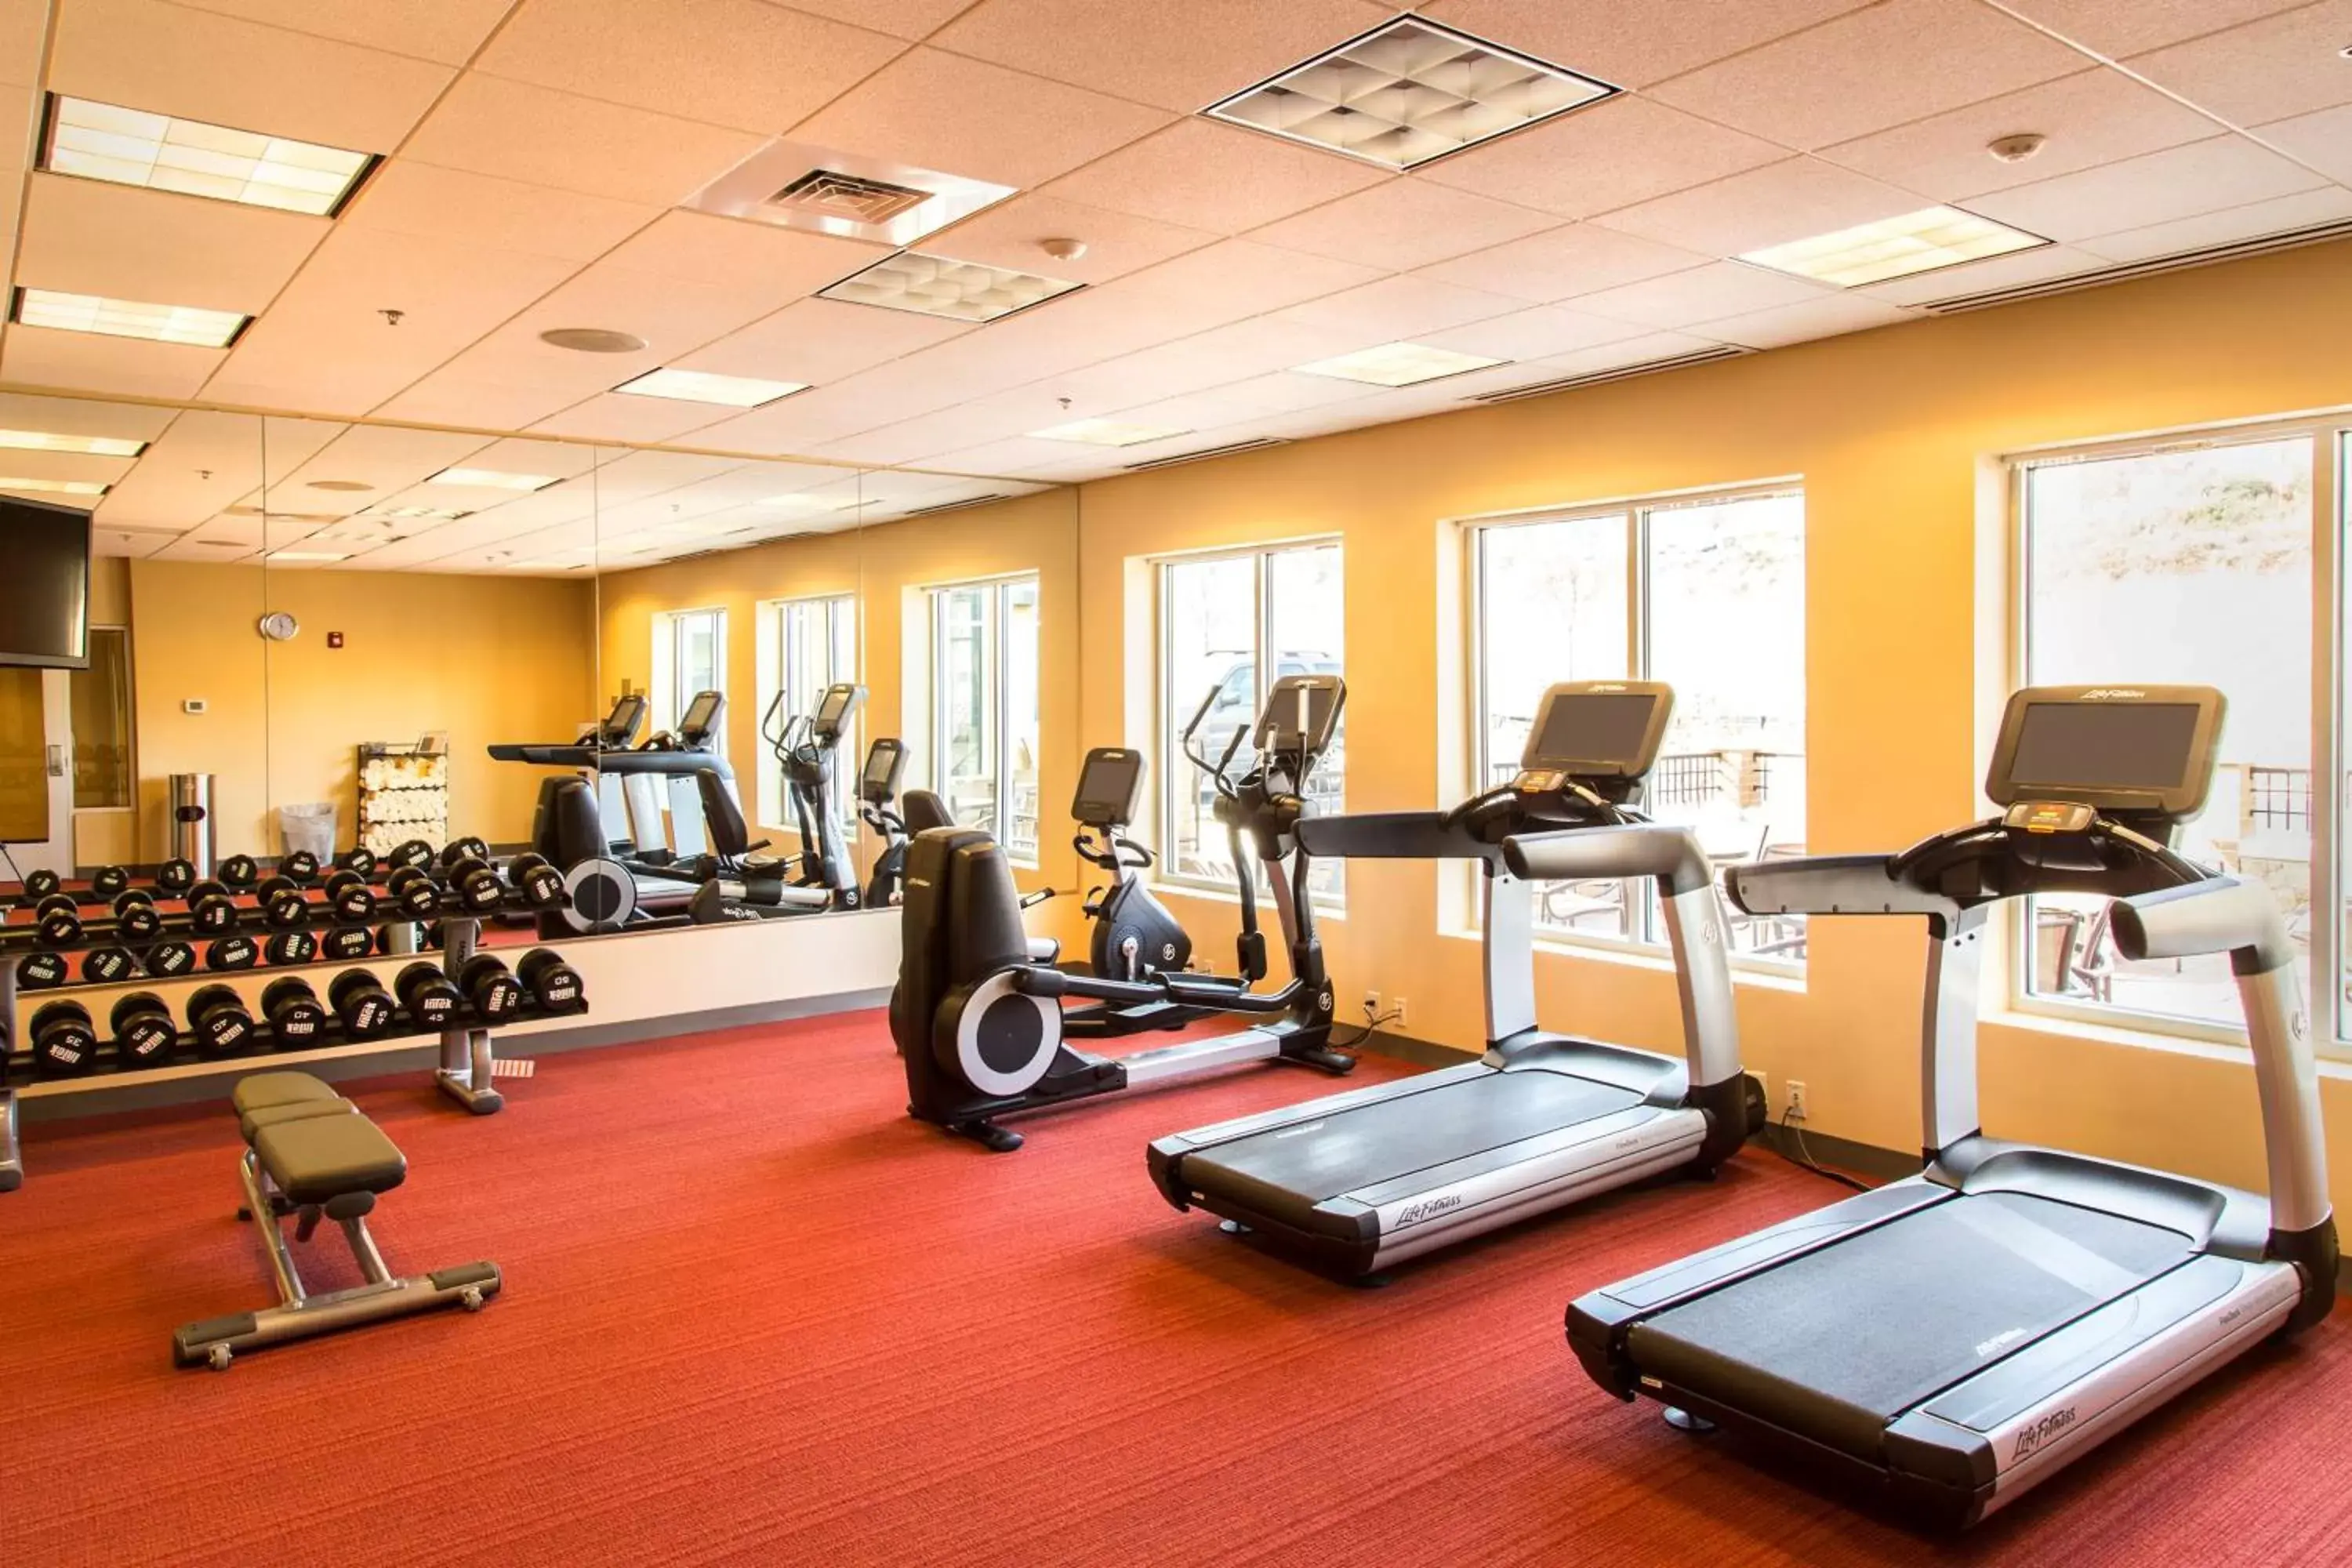 Fitness centre/facilities, Fitness Center/Facilities in Hyatt Place Charlottesville